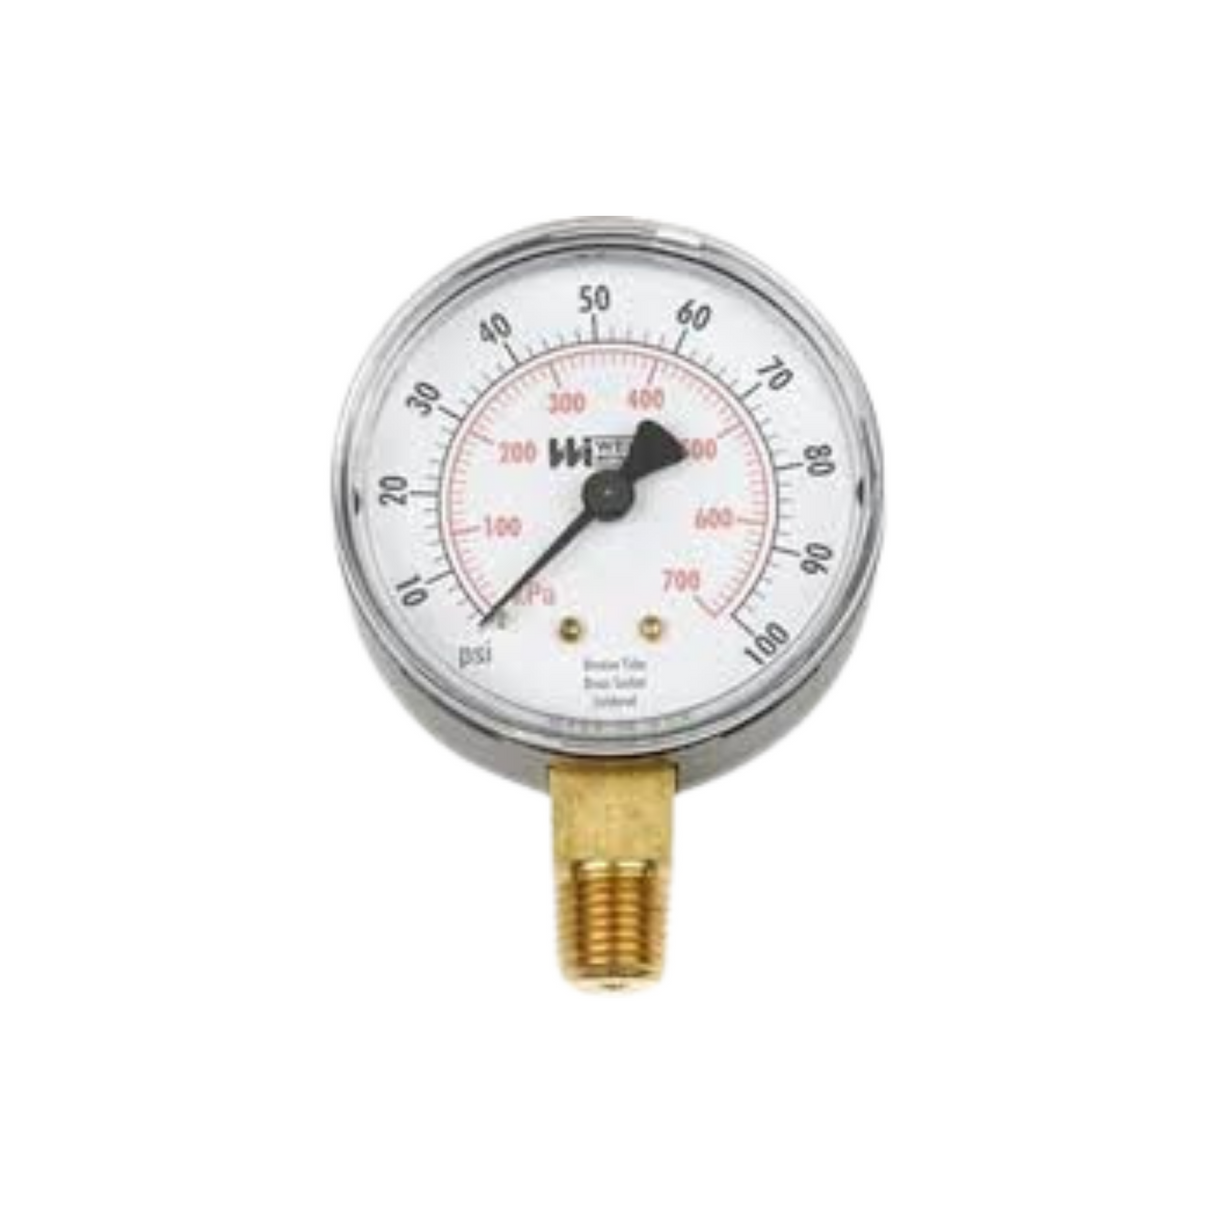 Weiss Instruments TL25-200 General Purpose Pressure Gauge